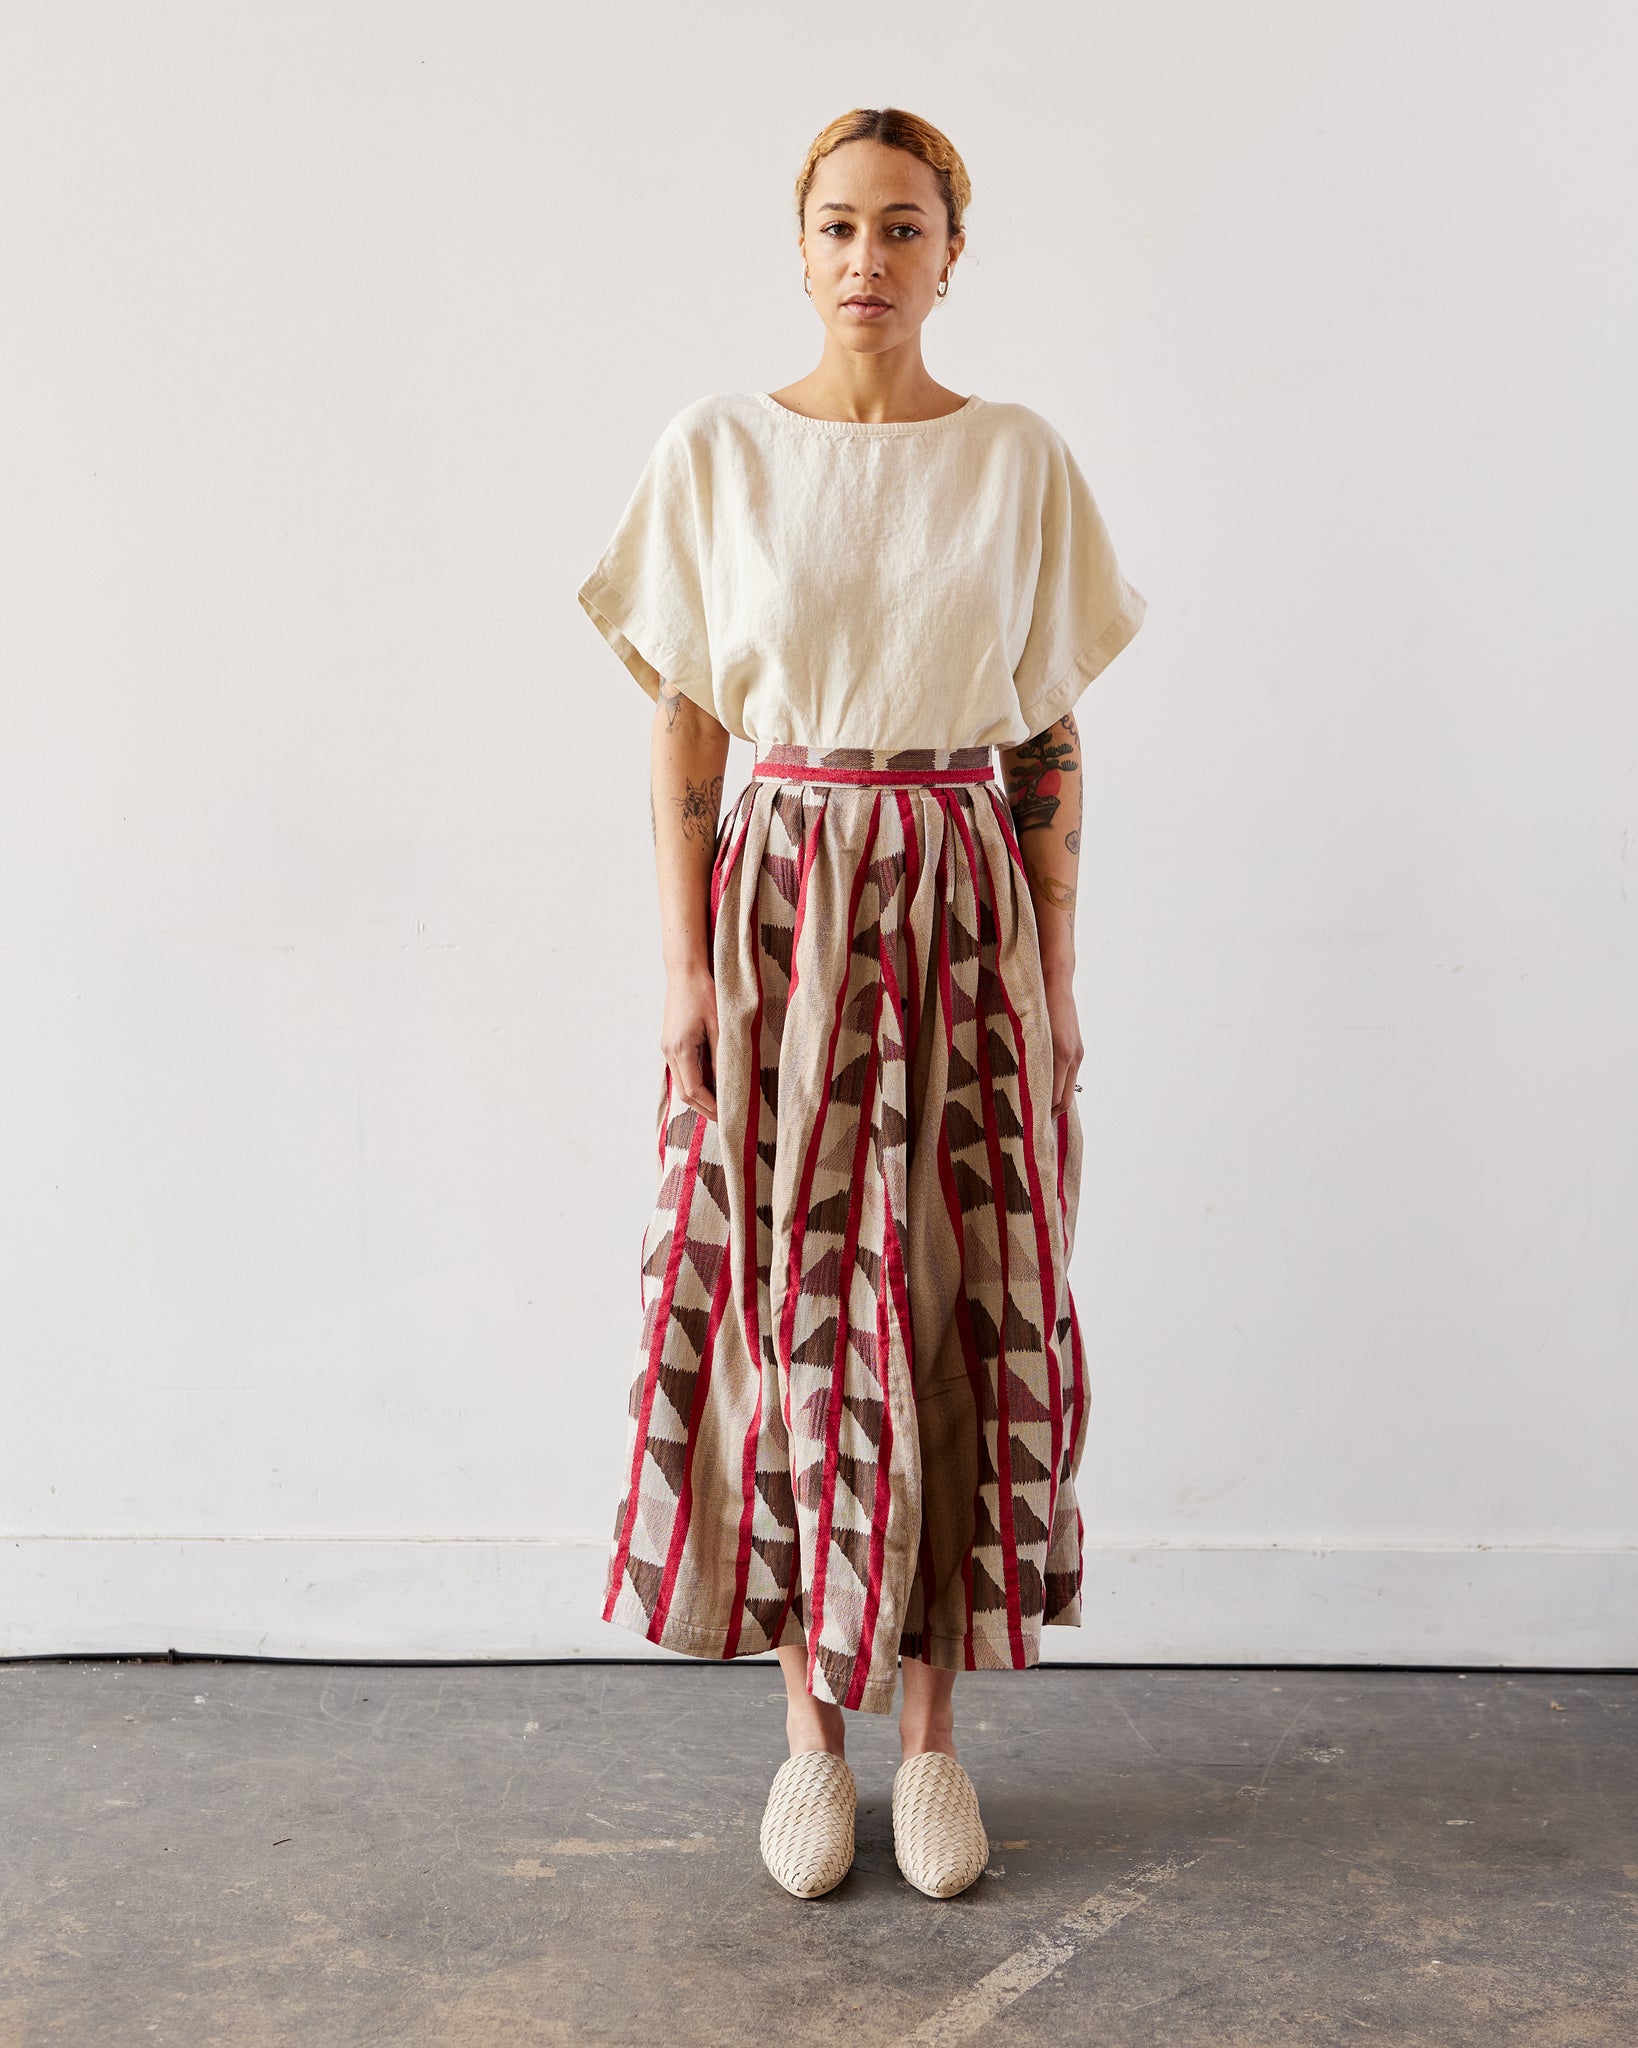 Kapital Pueblo Stripe Harvest Skirt, Red/Brown